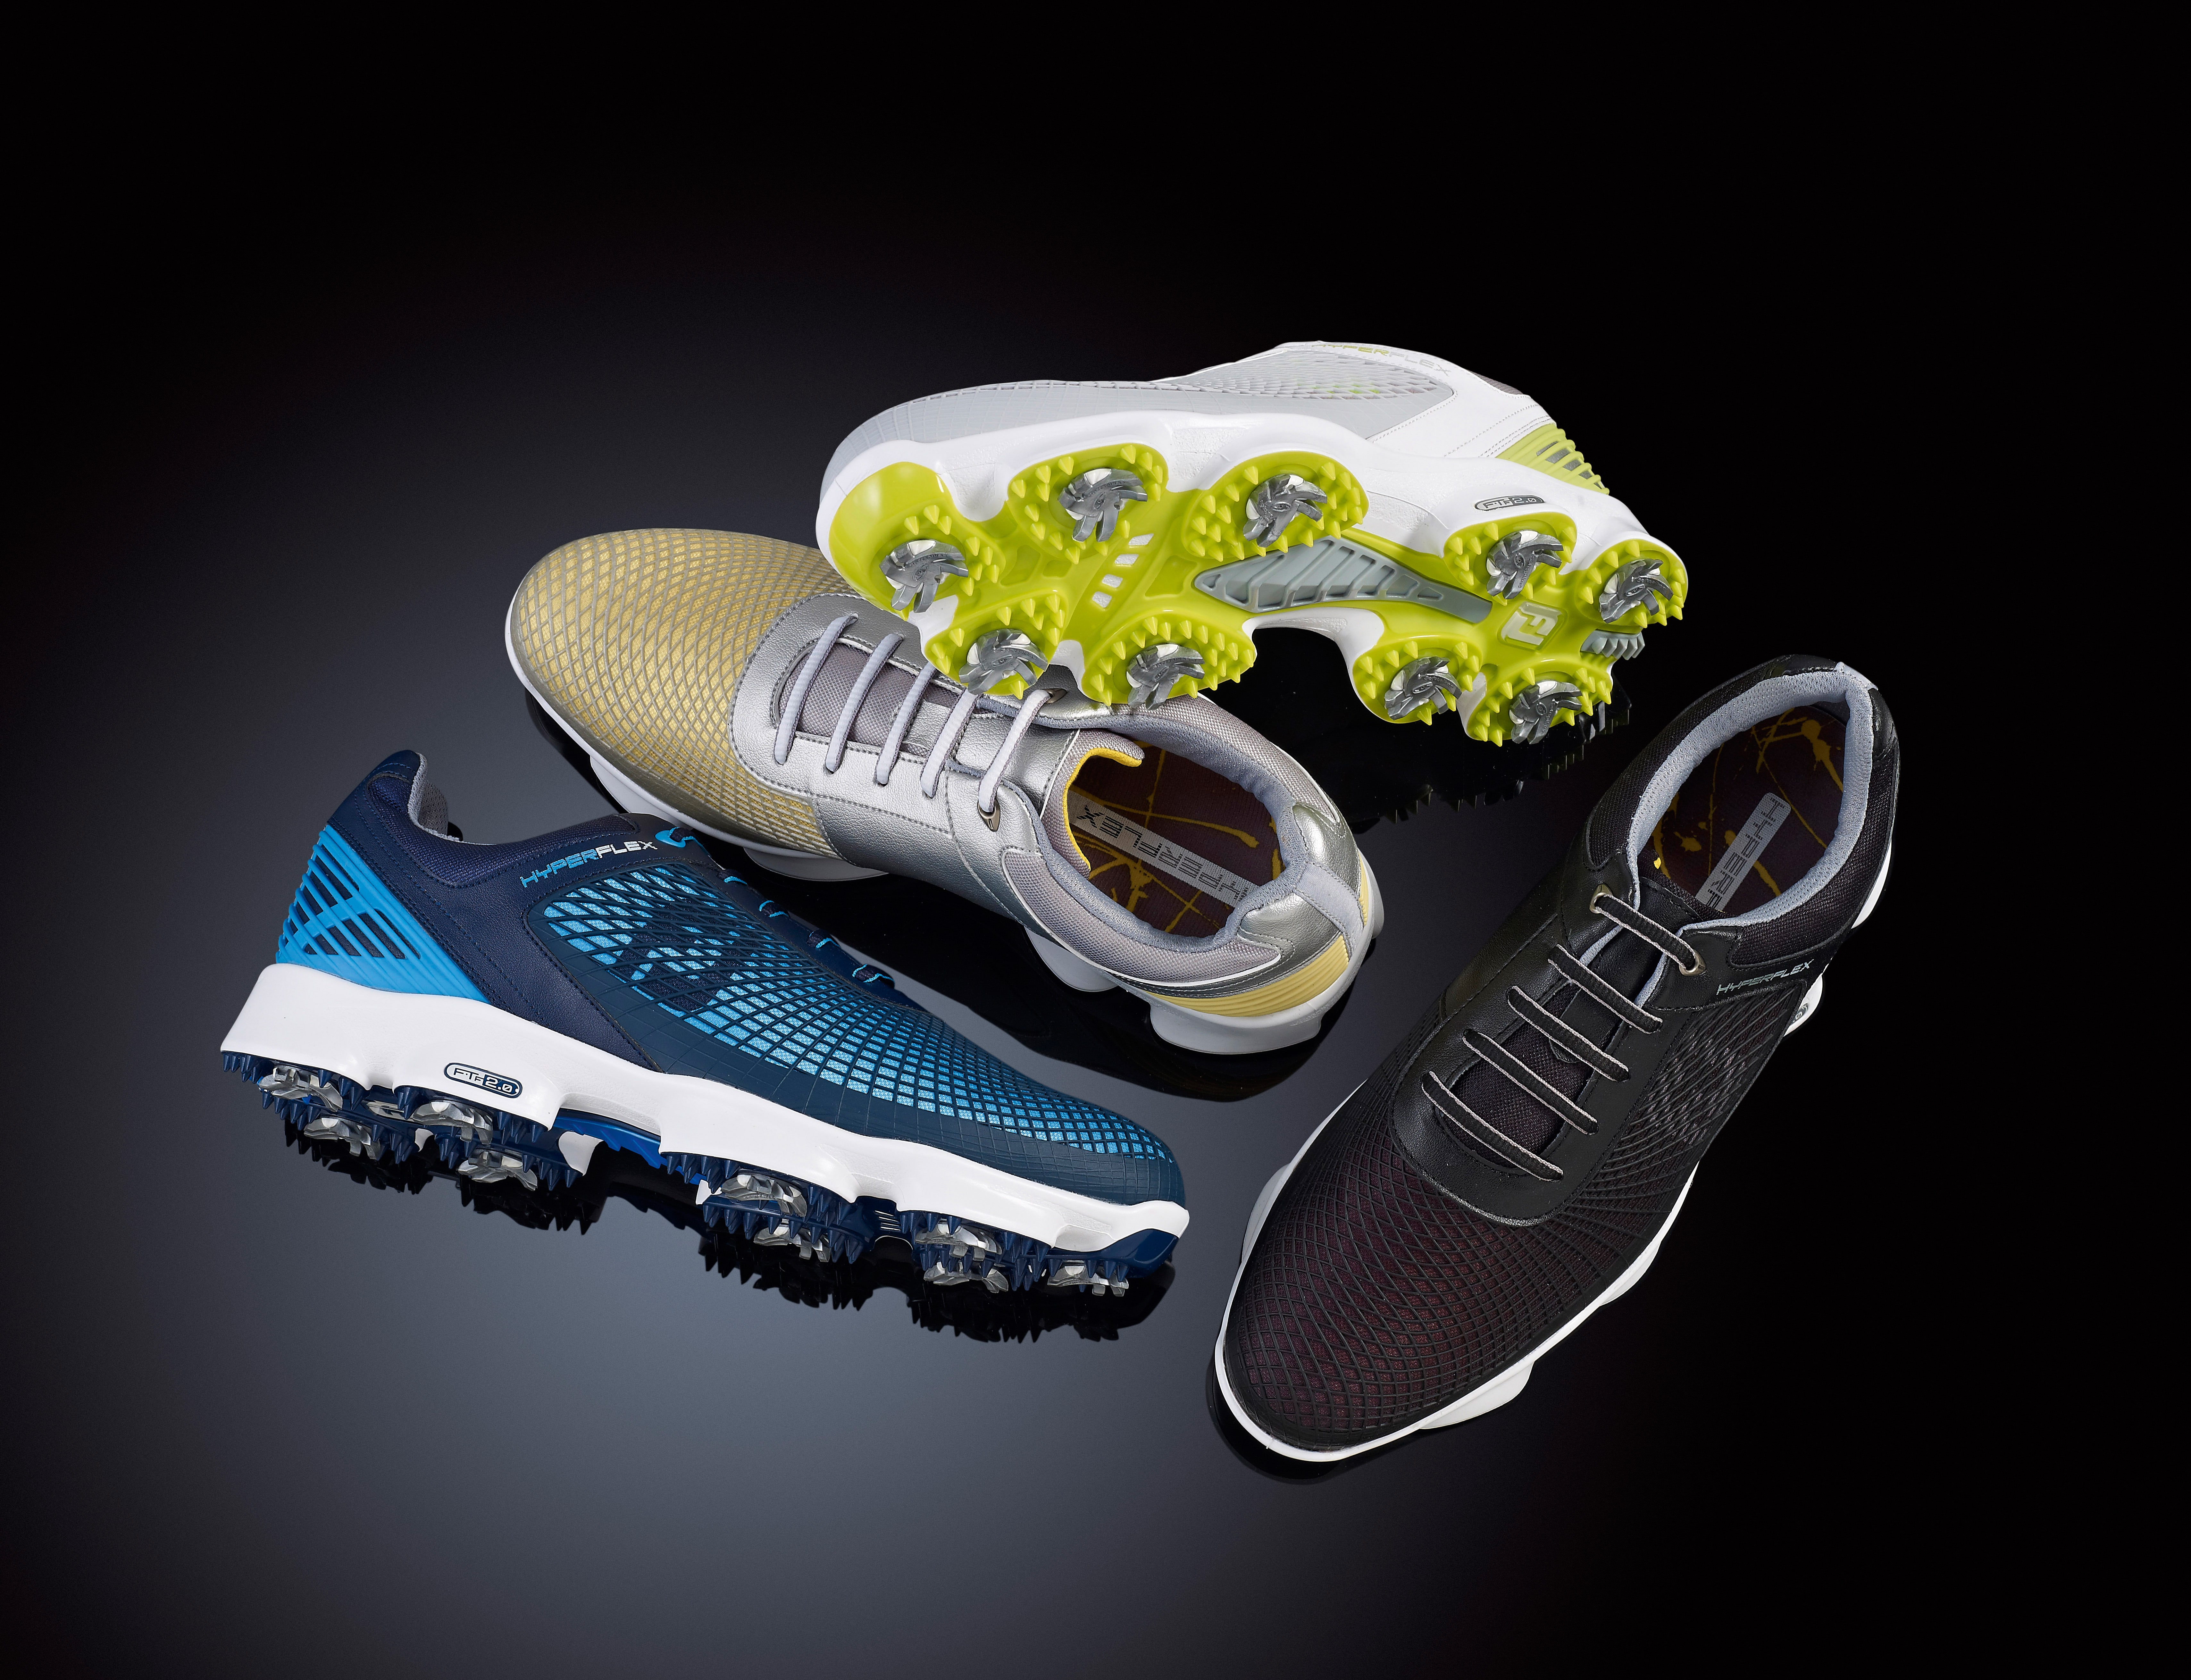 The Hyperflex is FootJoy's most athletic golf shoe